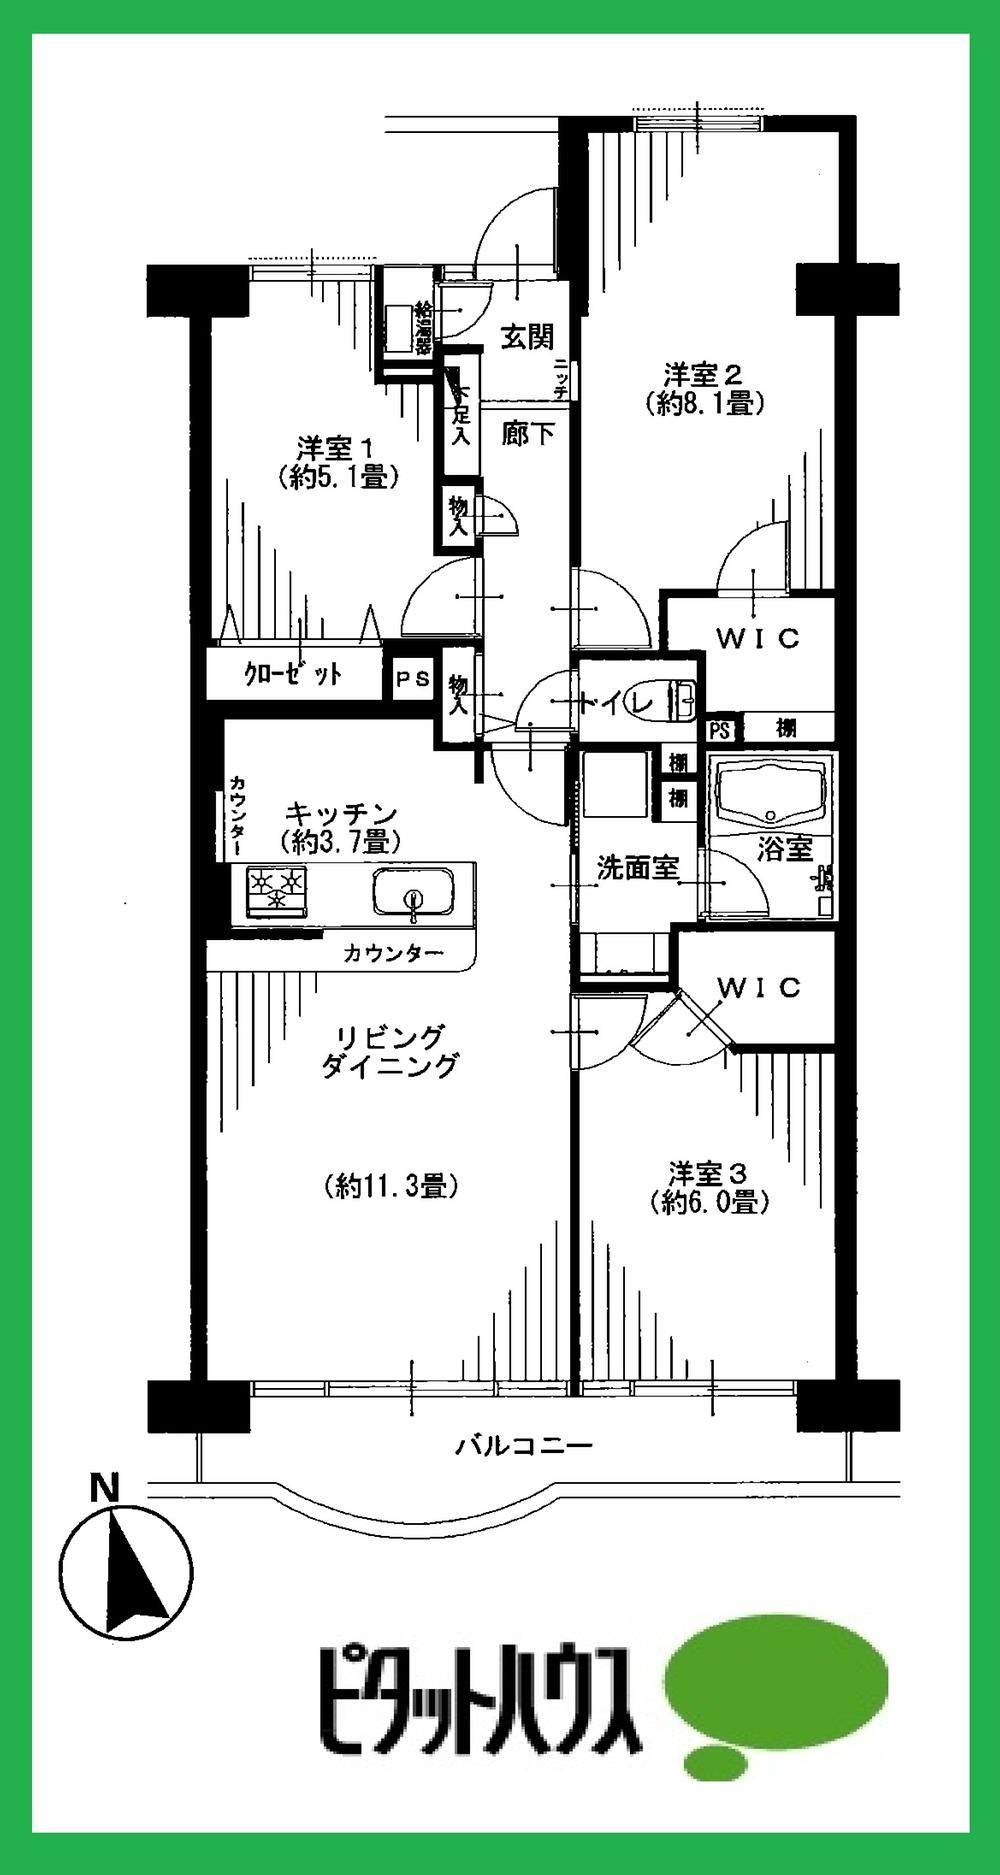 Floor plan. 3LDK + S (storeroom), Price 19,400,000 yen, Occupied area 74.68 sq m , Balcony area 7.3 sq m